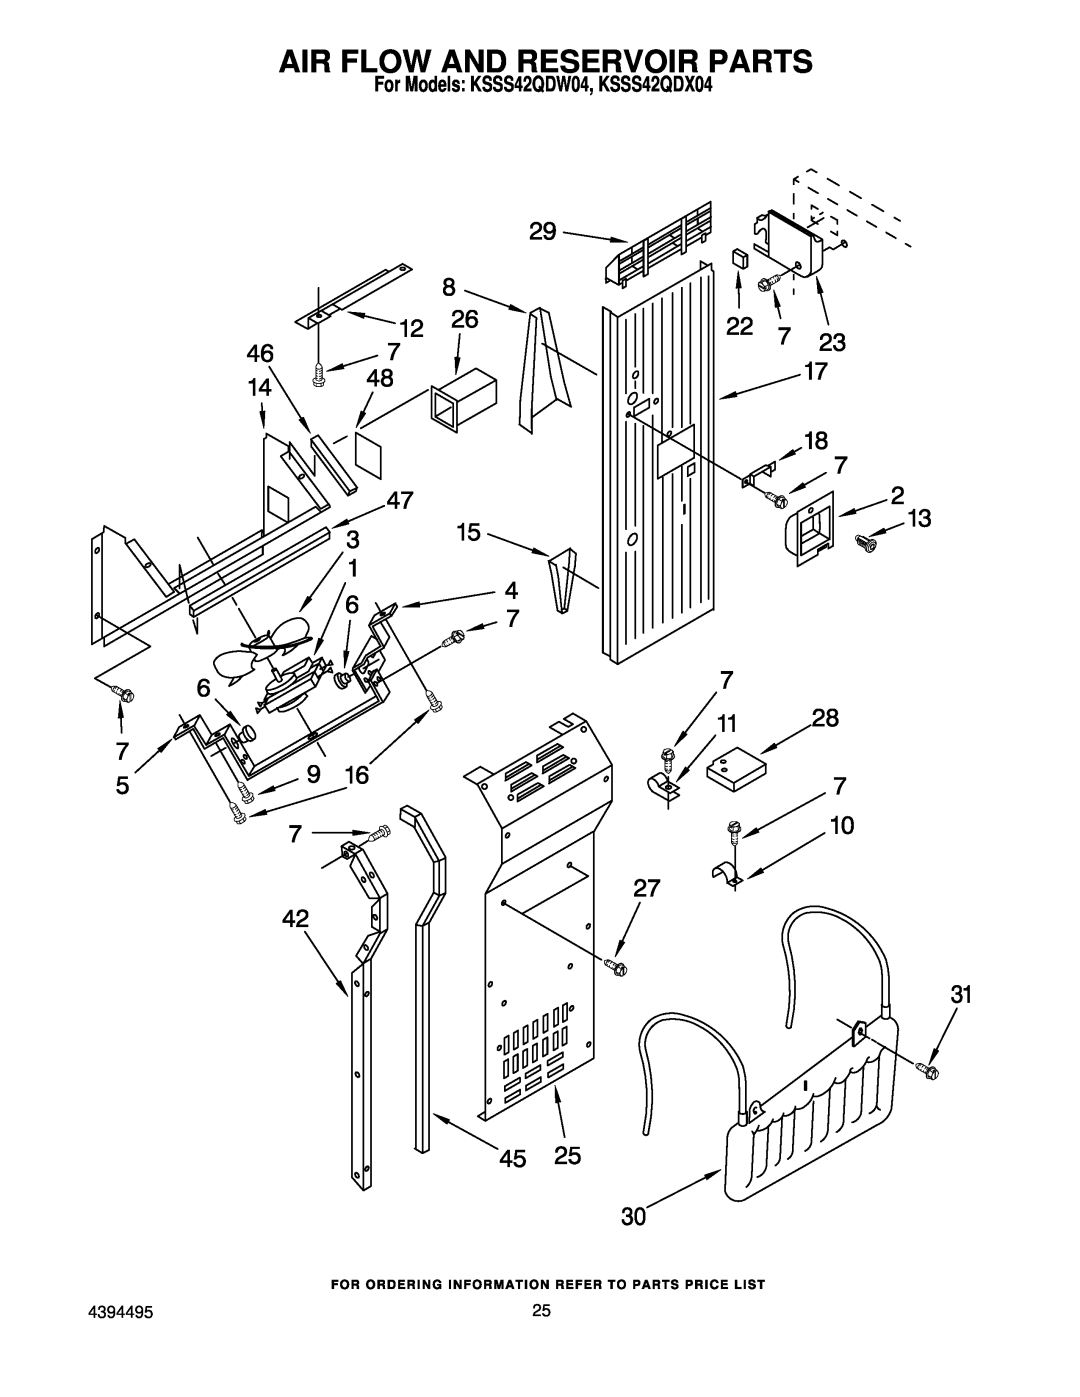 KitchenAid manual Air Flow And Reservoir Parts, For Models KSSS42QDW04, KSSS42QDX04 